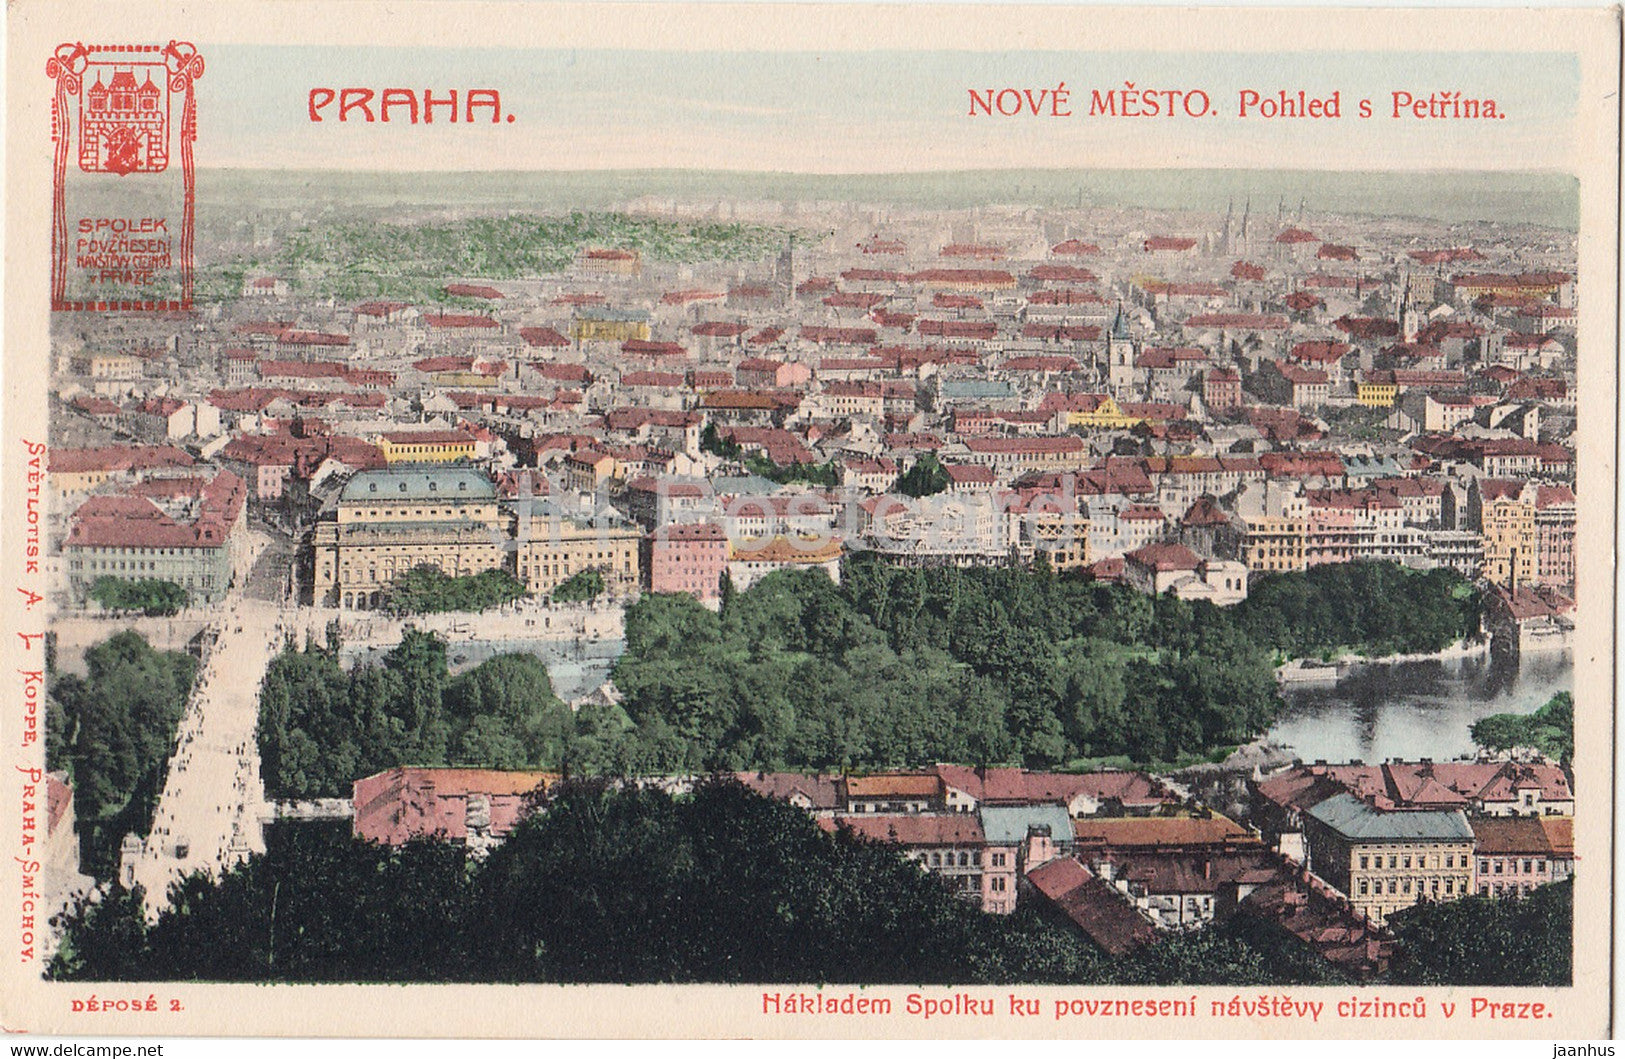 Nove Mesto - Pohled s Petrina - Depose 2 - old postcard - Czech Republic - unused - JH Postcards